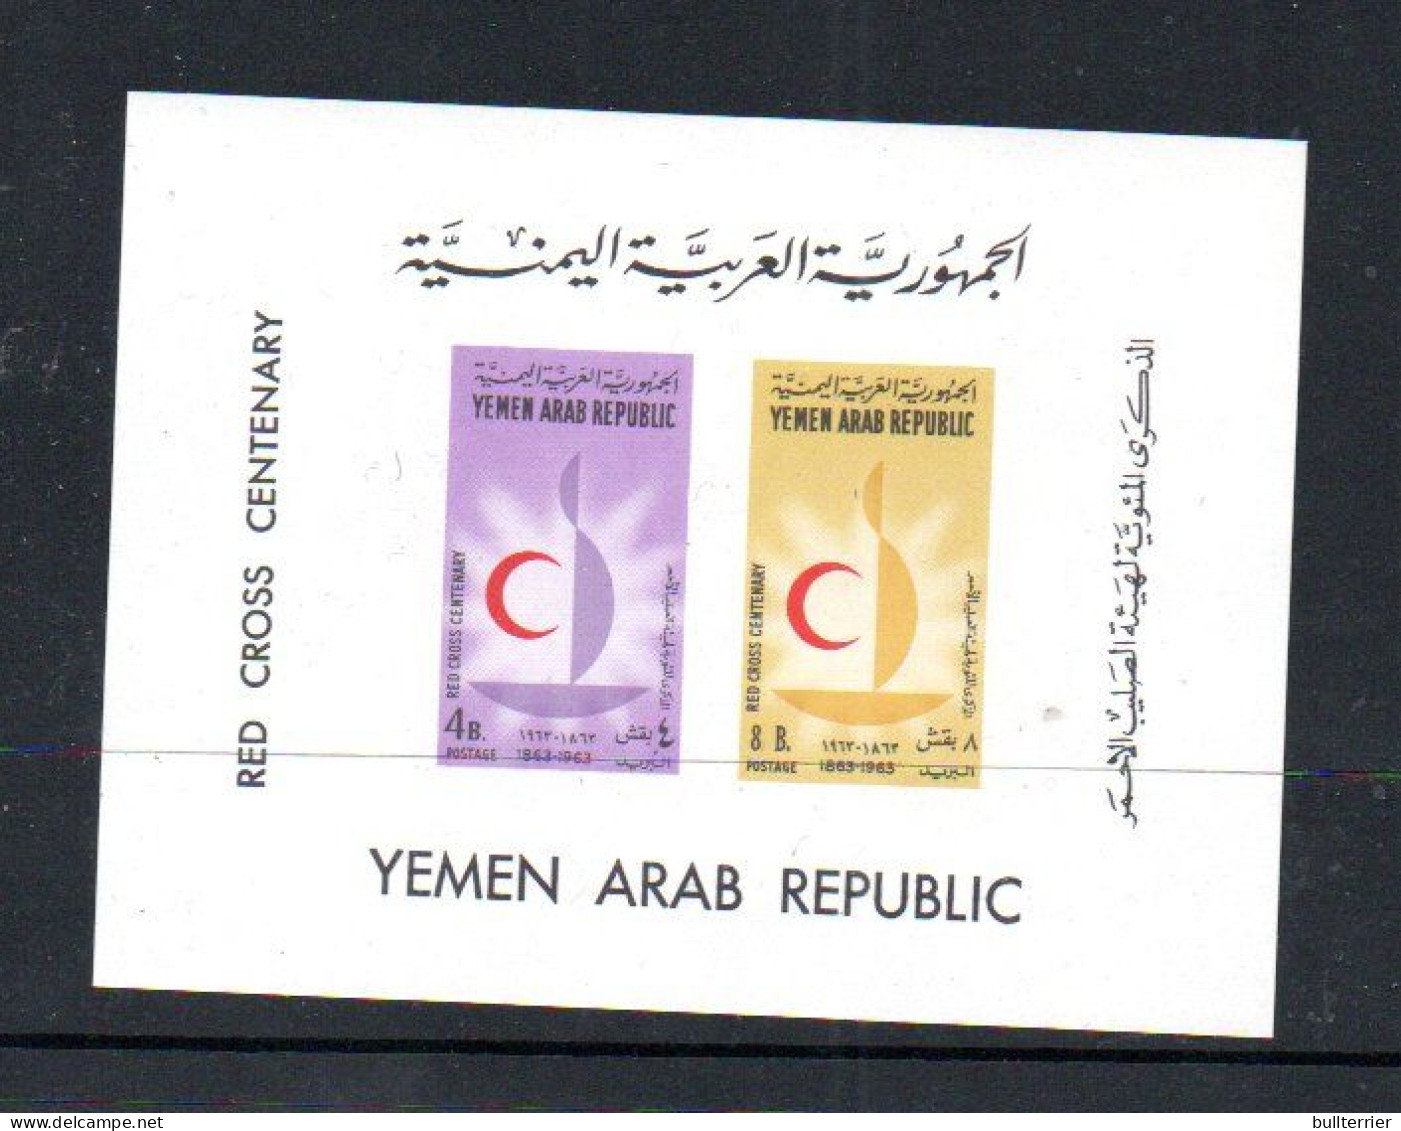 MEDICINE - YEMEN ARAB REPUBLIC - 1963 - RED CROSS CENTENARY  S/SHEET MINT NEVER HINGED SG £22 - Médecine